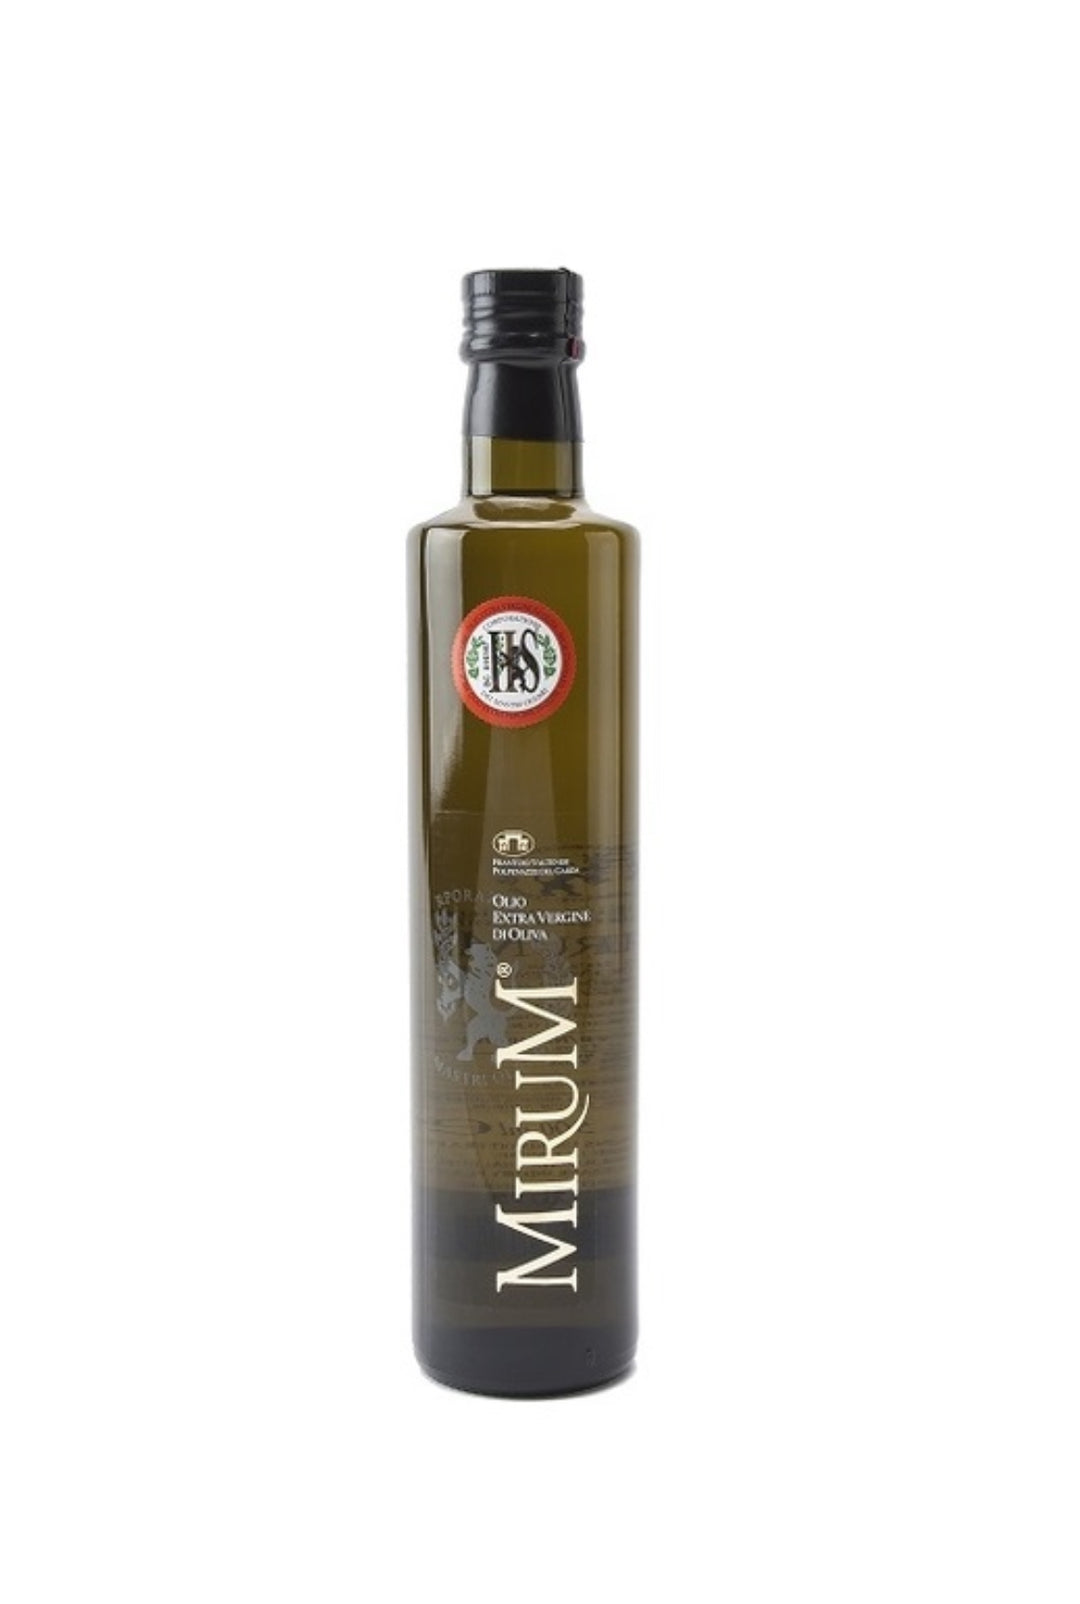 MIRUM CRU Extra virgin olive oil 500 ml 